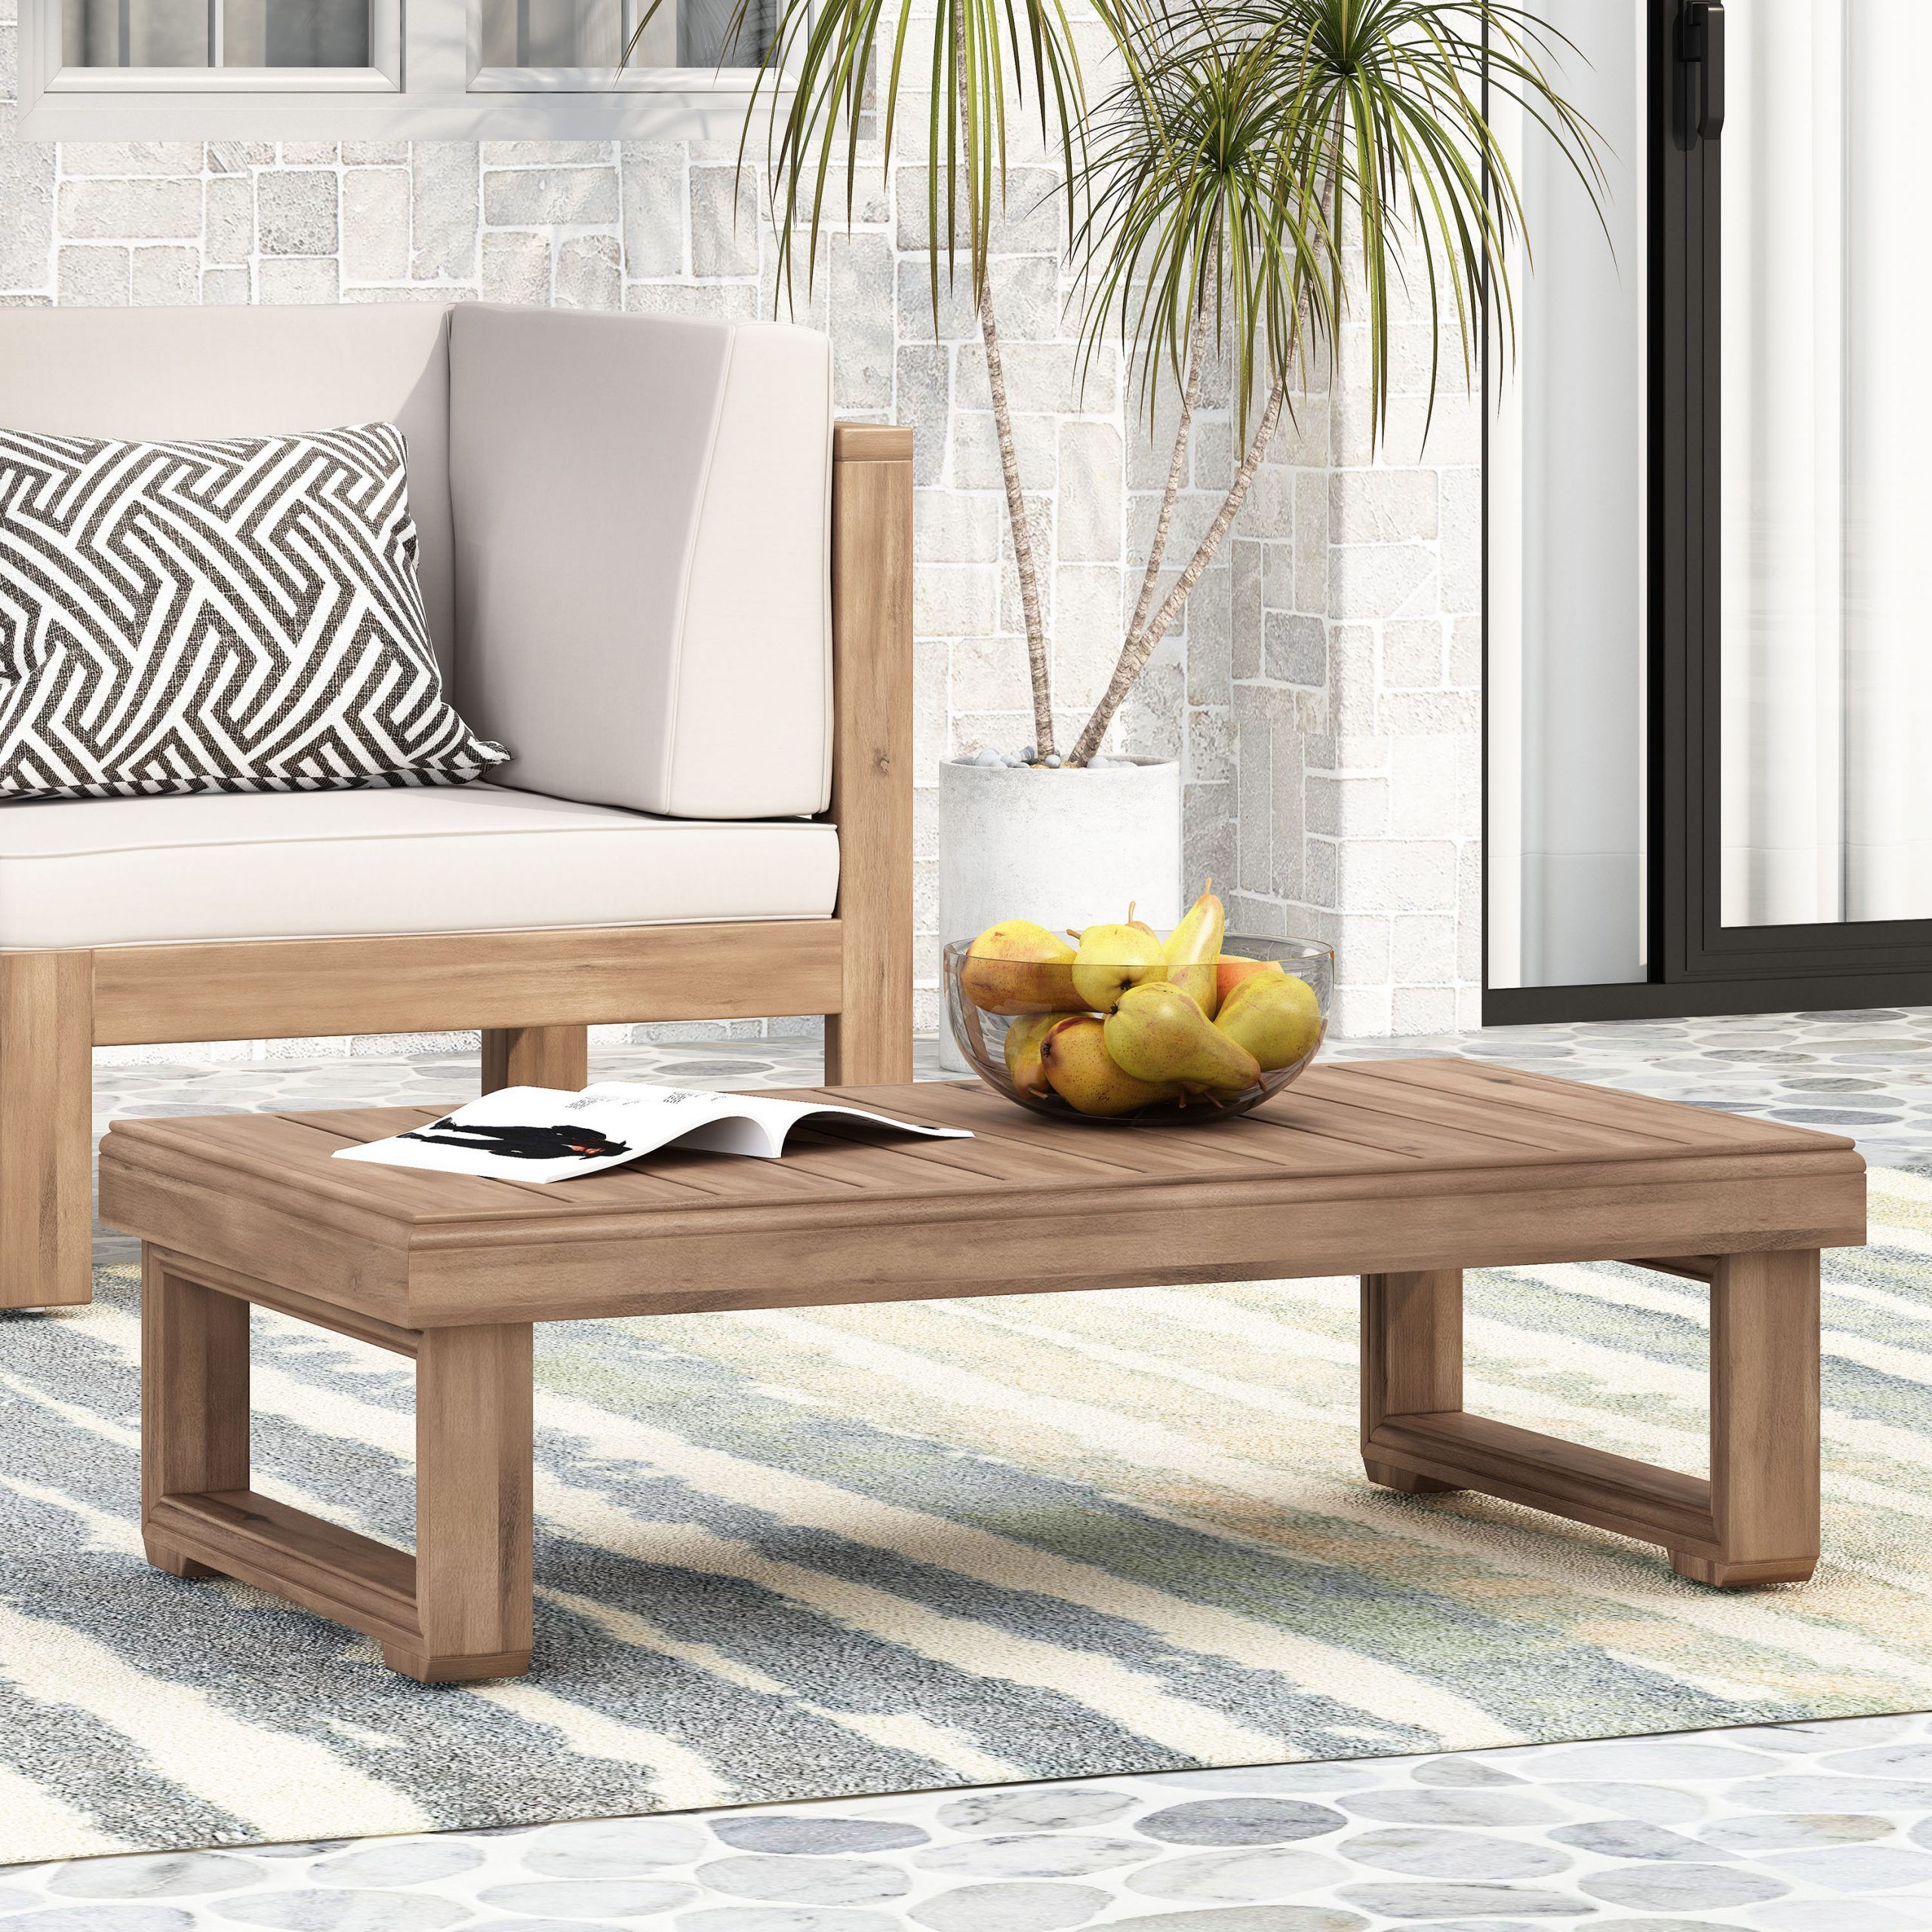 Nfusion Acacia Solid Wood Coffee Table | Wayfair With Regard To Solid Acacia Wood Coffee Tables (View 6 of 15)